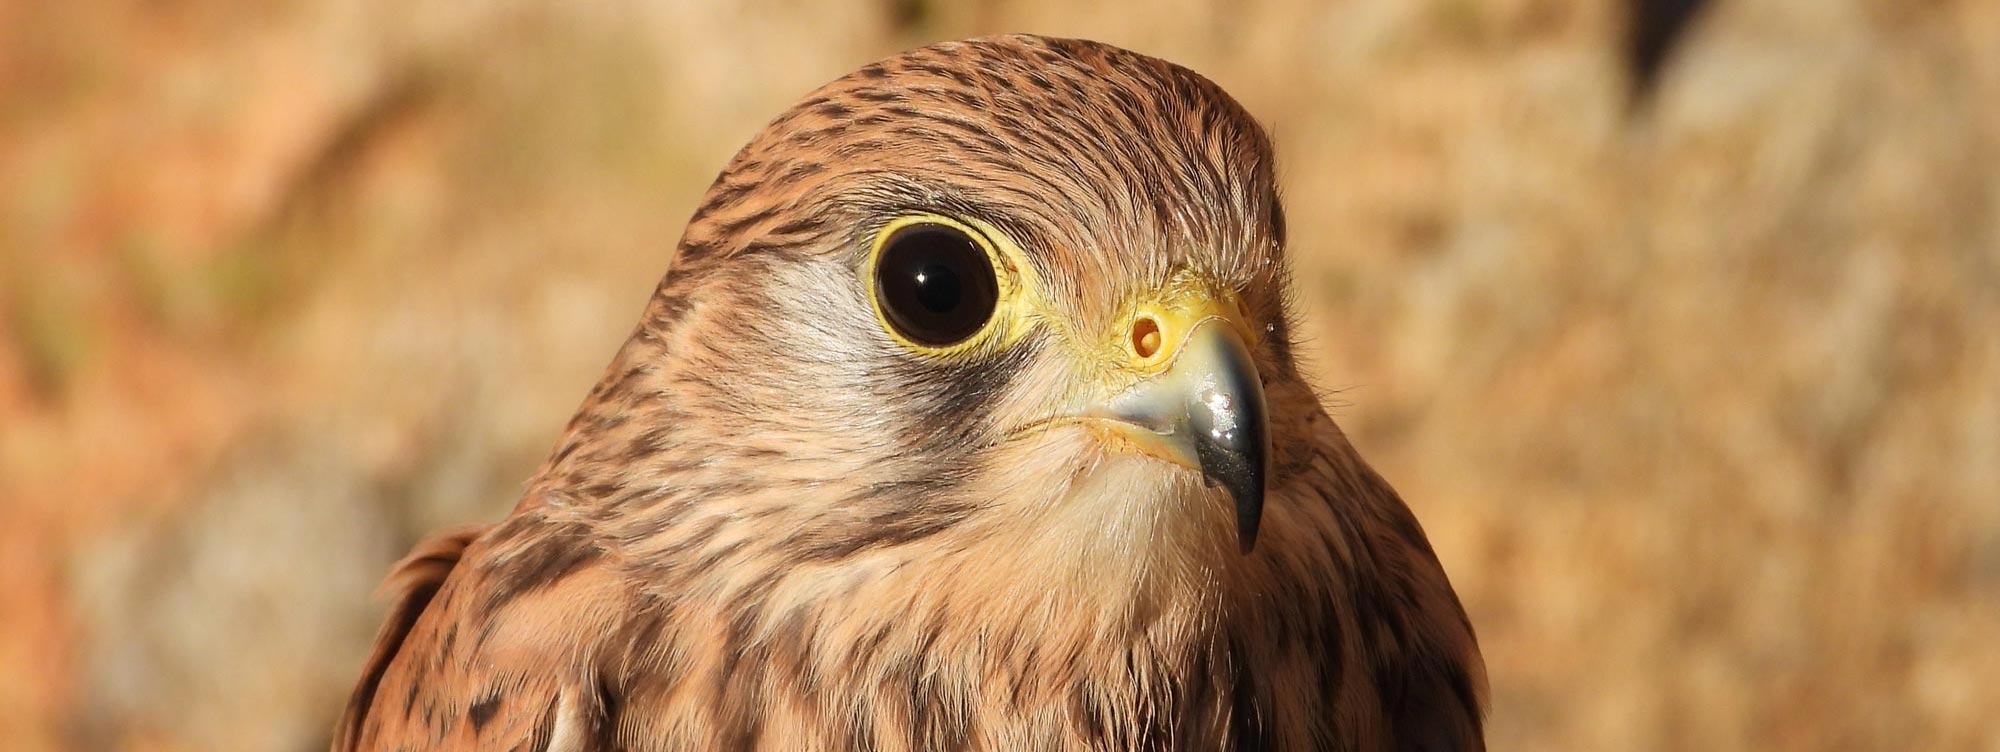 Birding La Mancha - Aves Rapaces